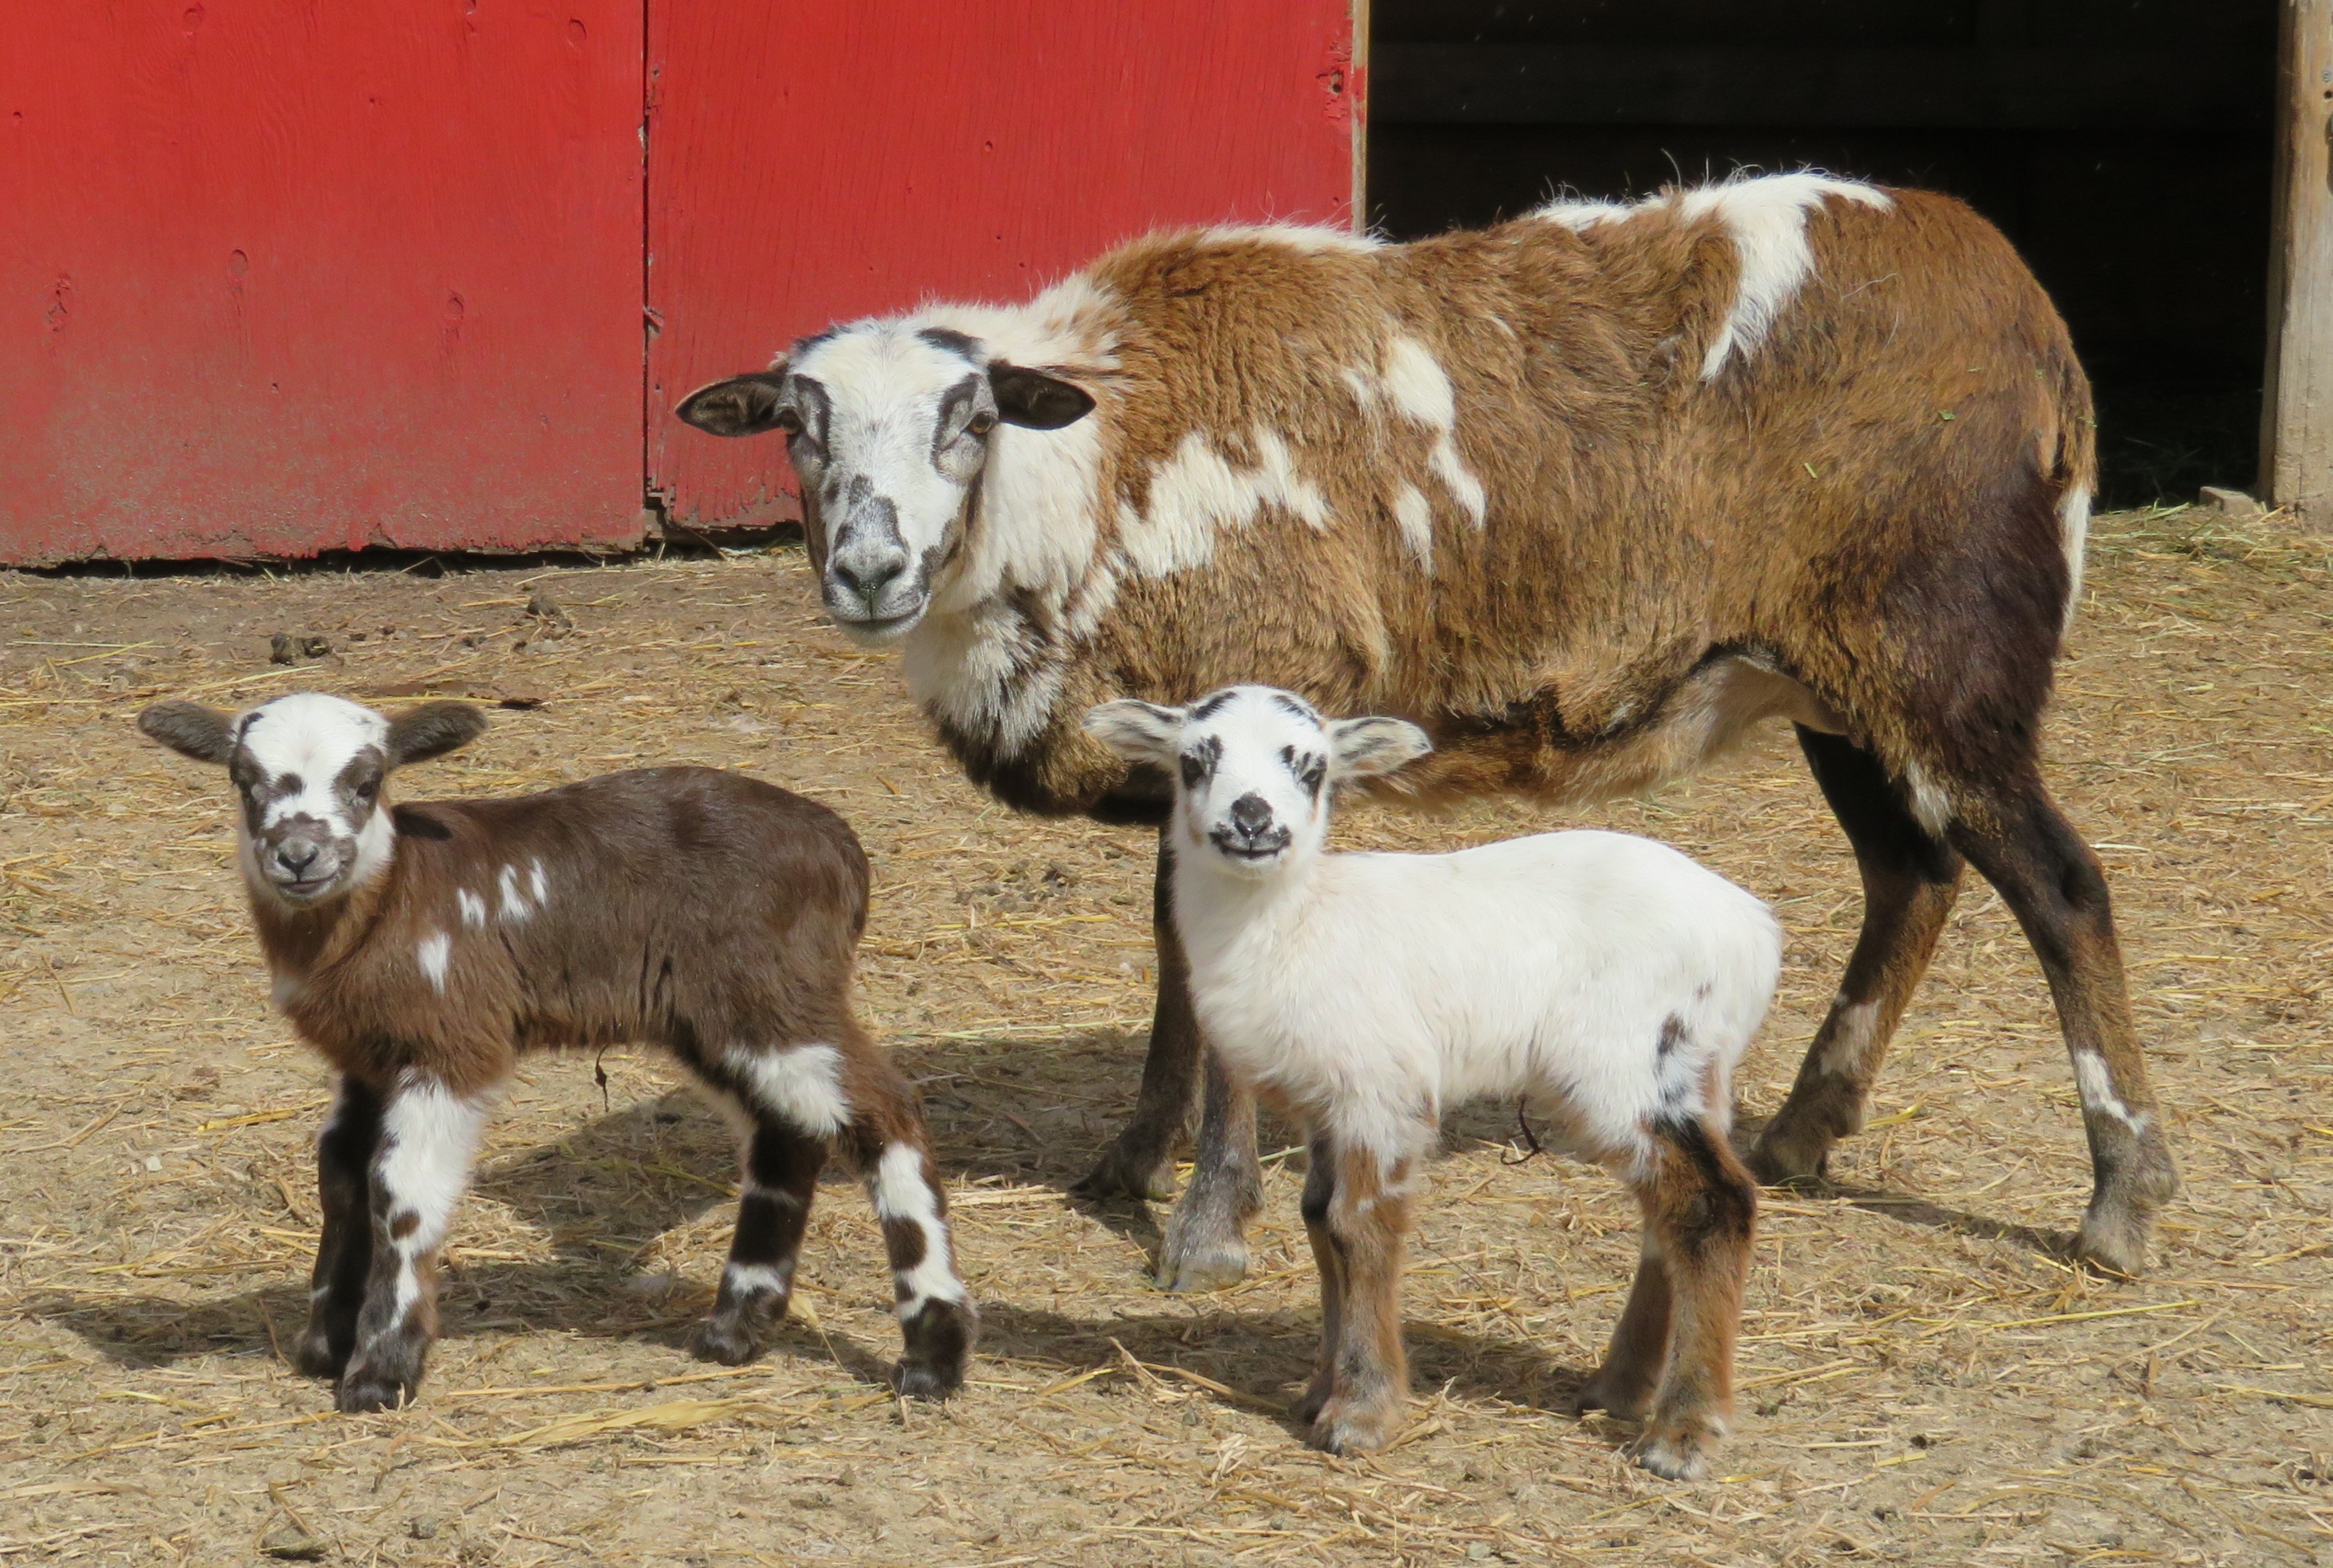 Big Rock Bella
twin ram lambs 